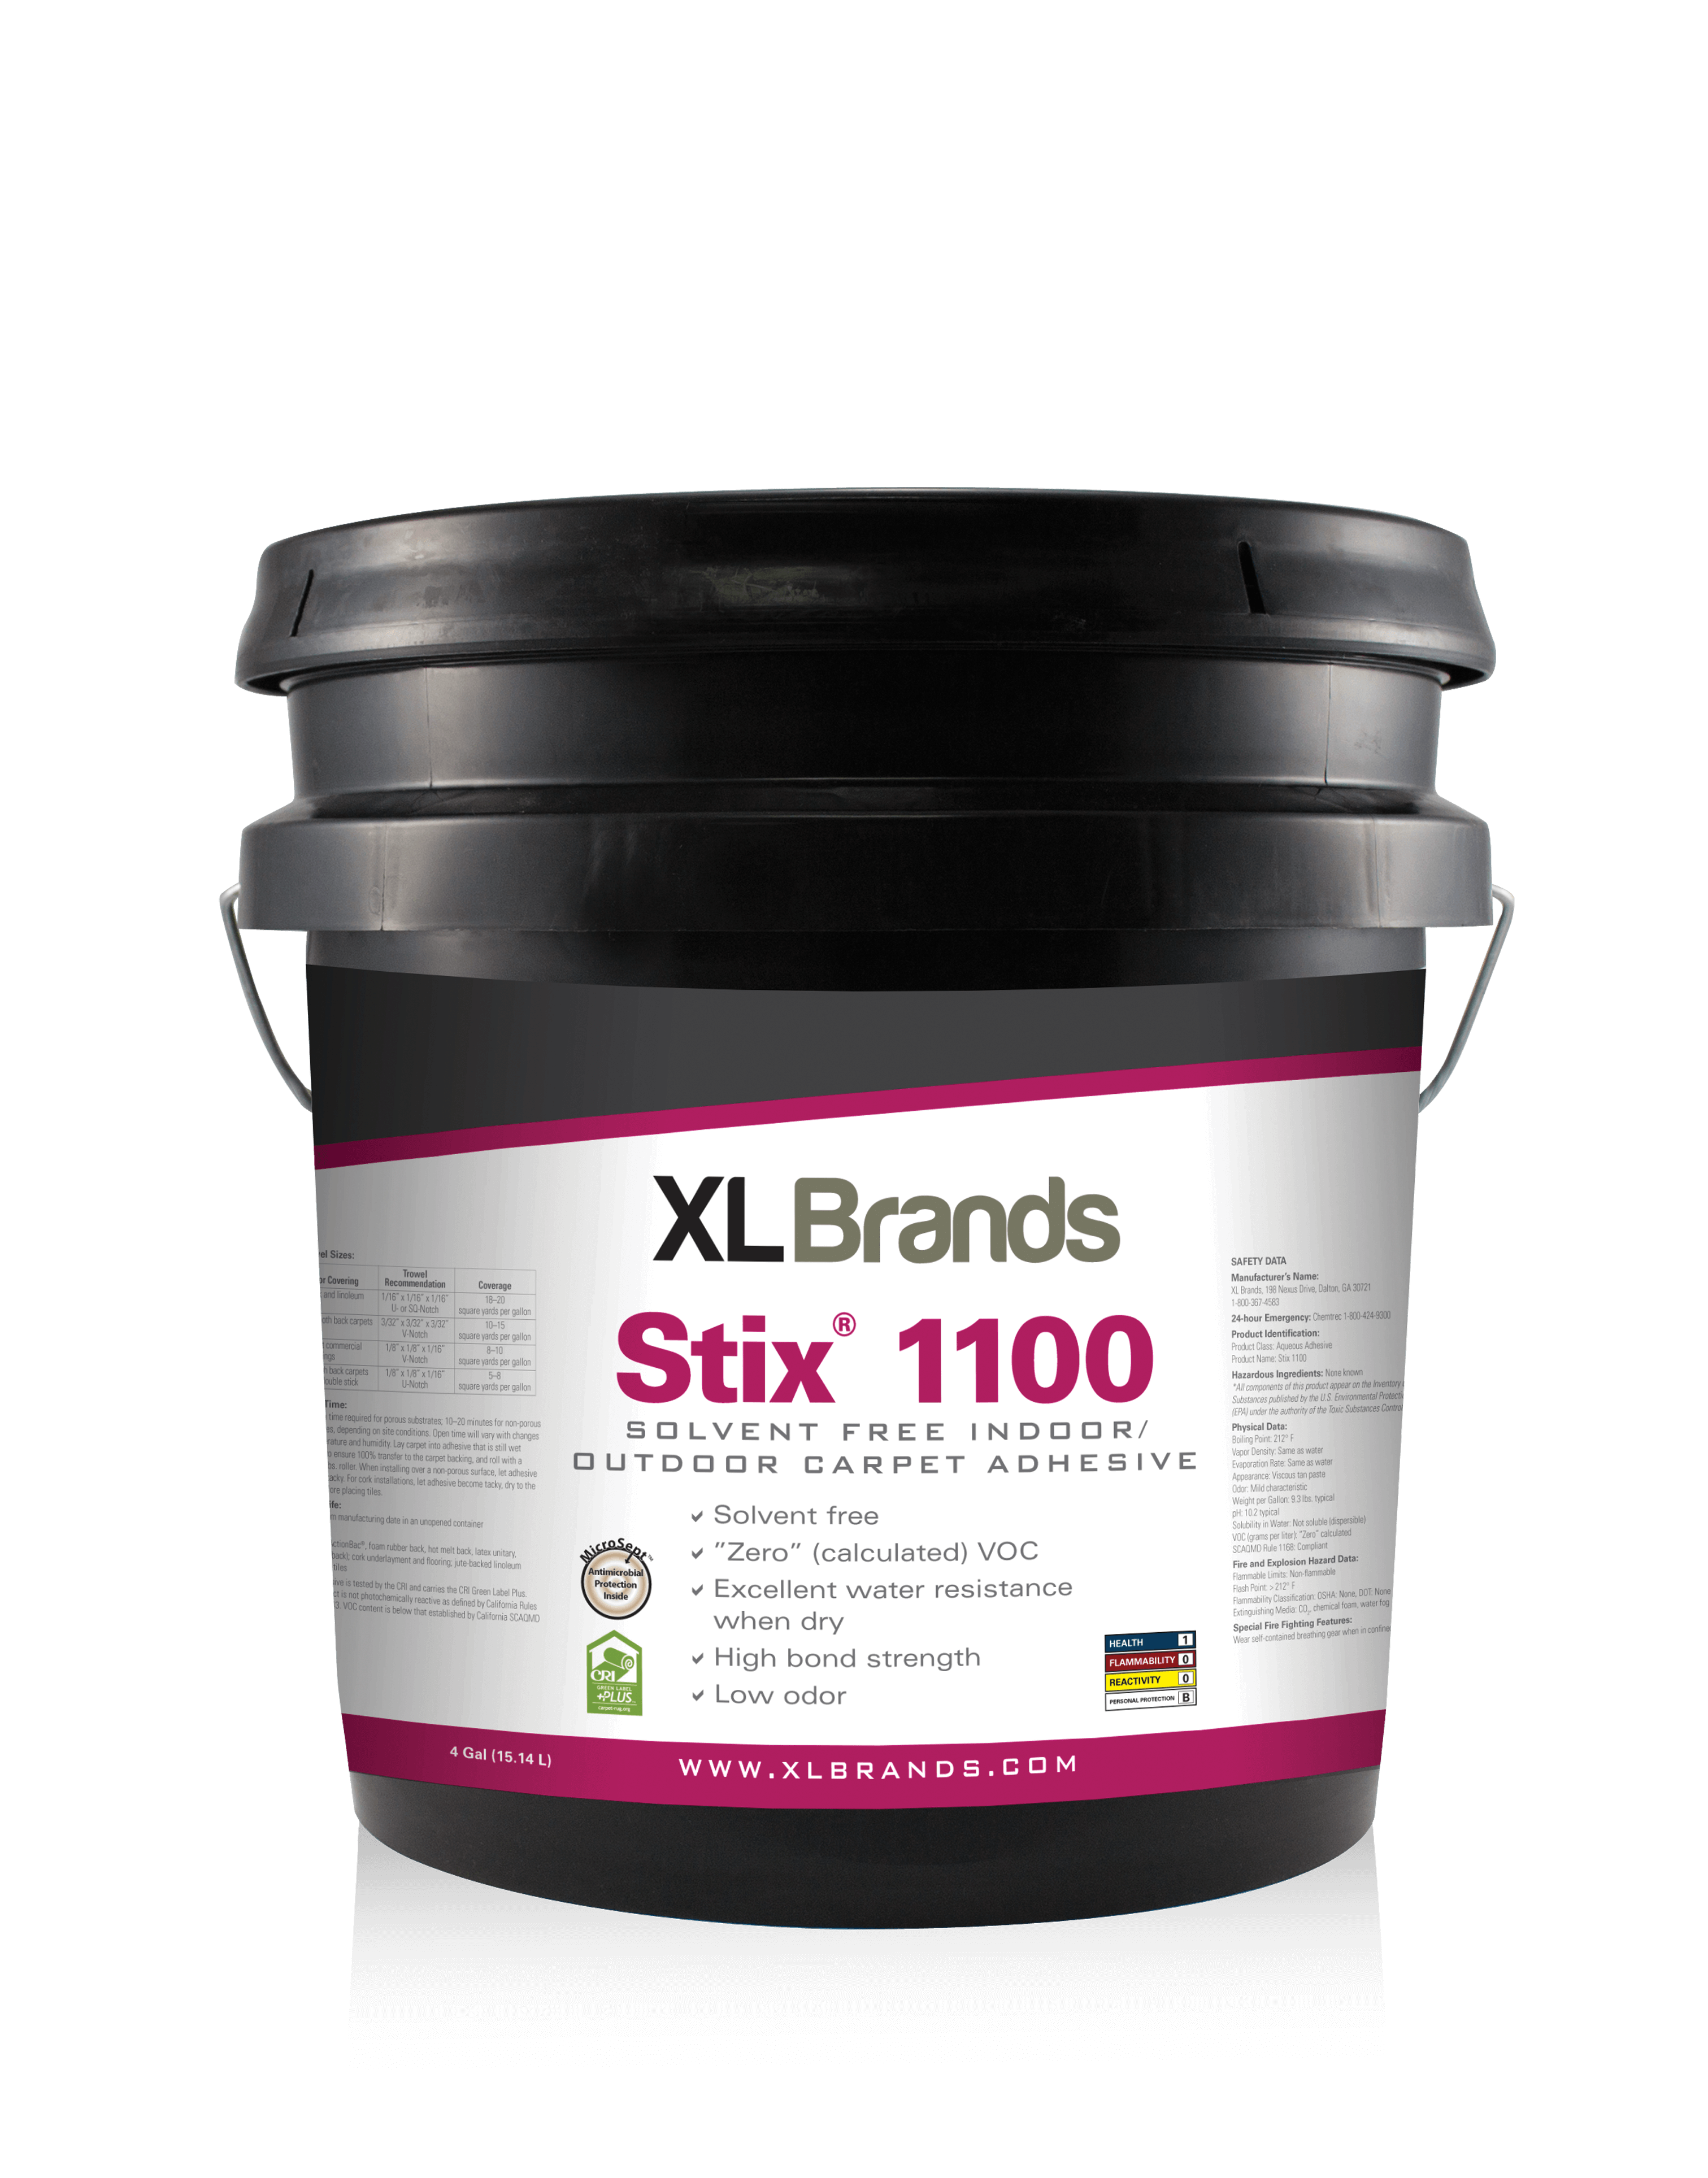 XL Brands Stix 1100 Solvent Free Indoor/Outdoor Carpet Adhesive - 4 Gal.